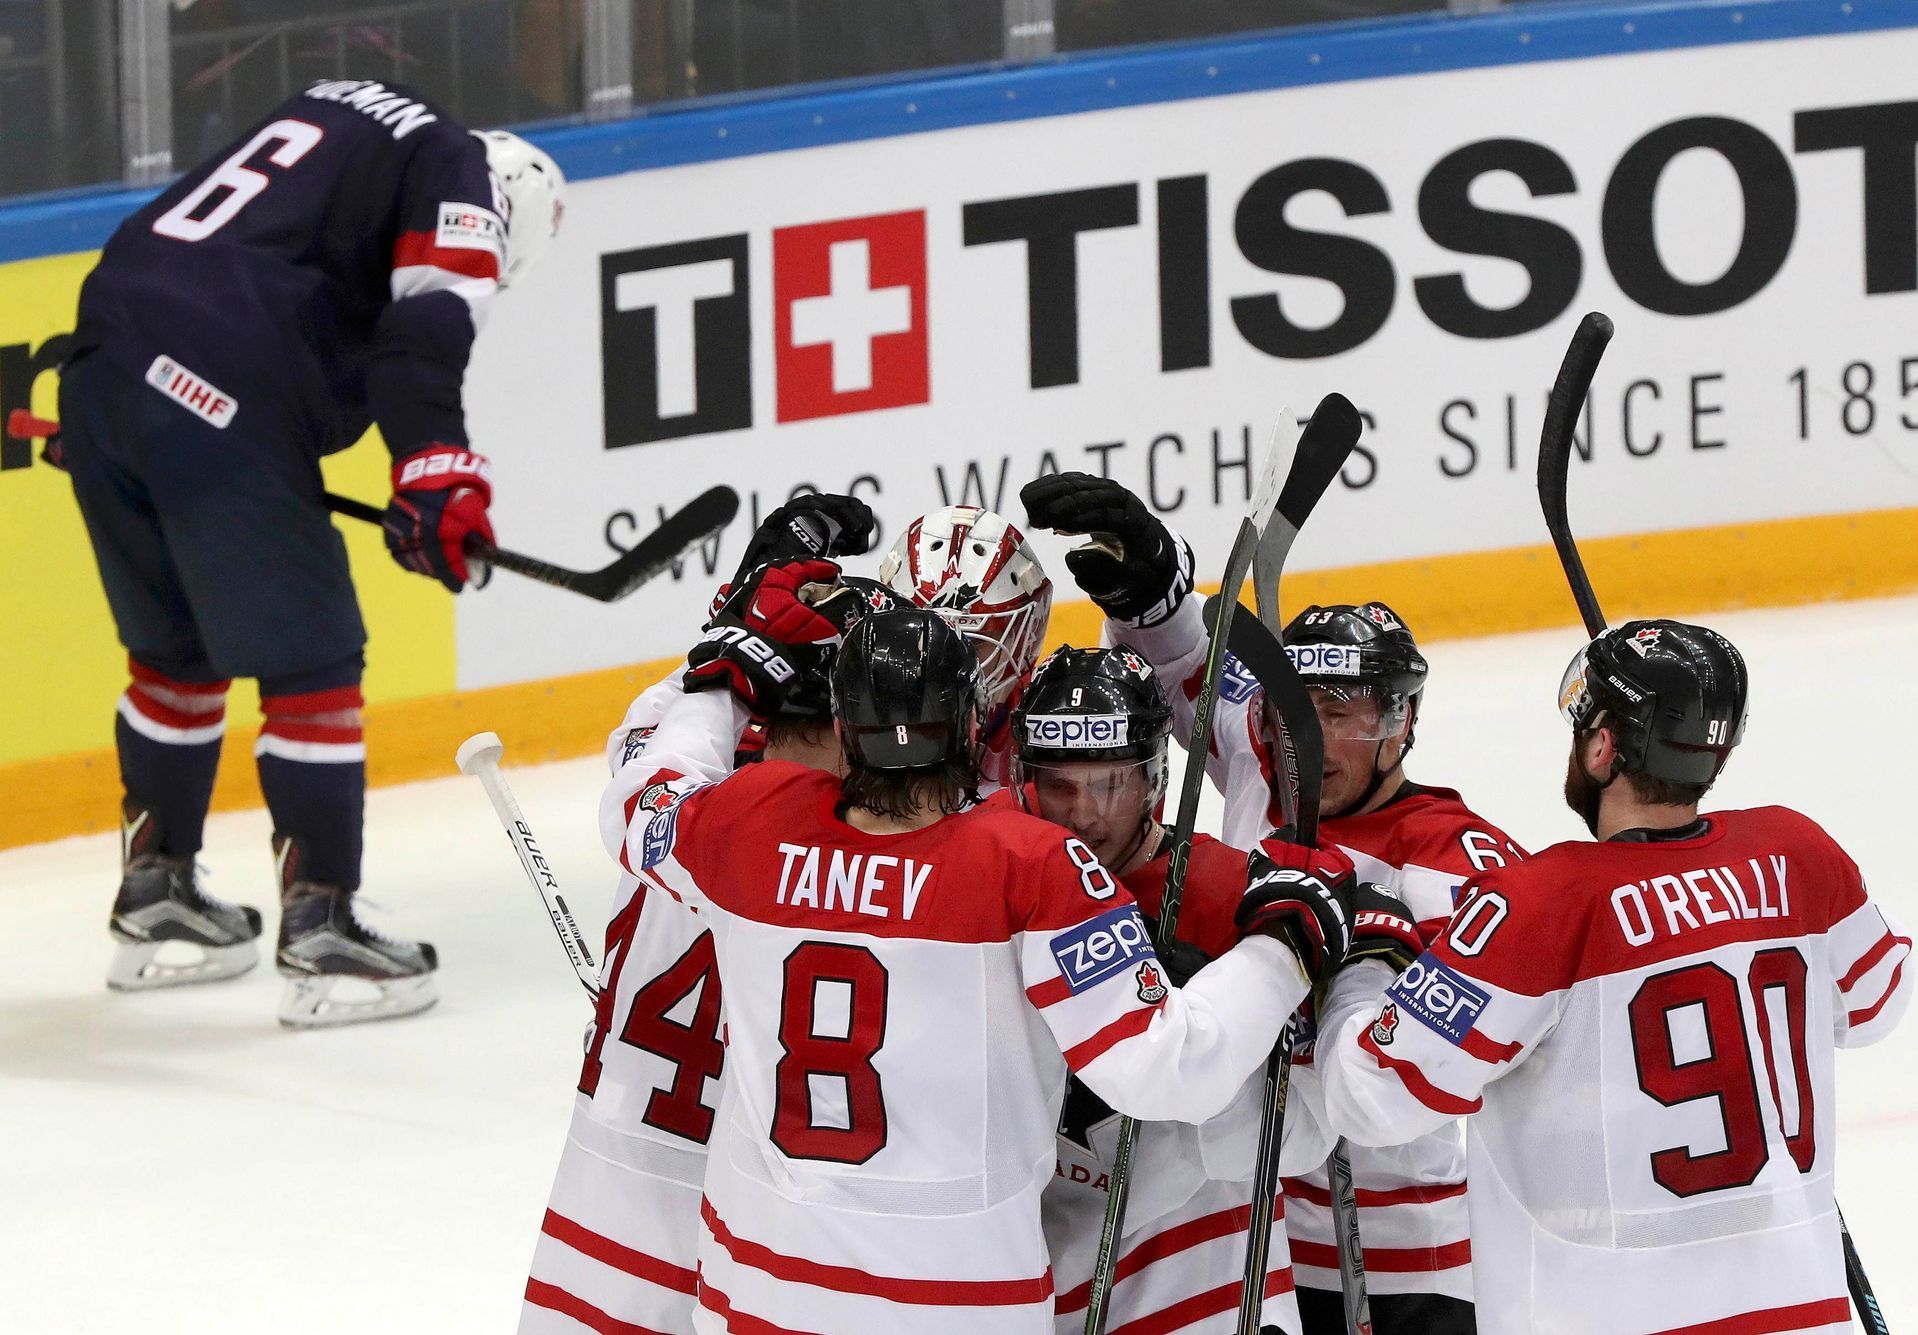 Ice Hockey - 2016 IIHF World Championship - Semi-final